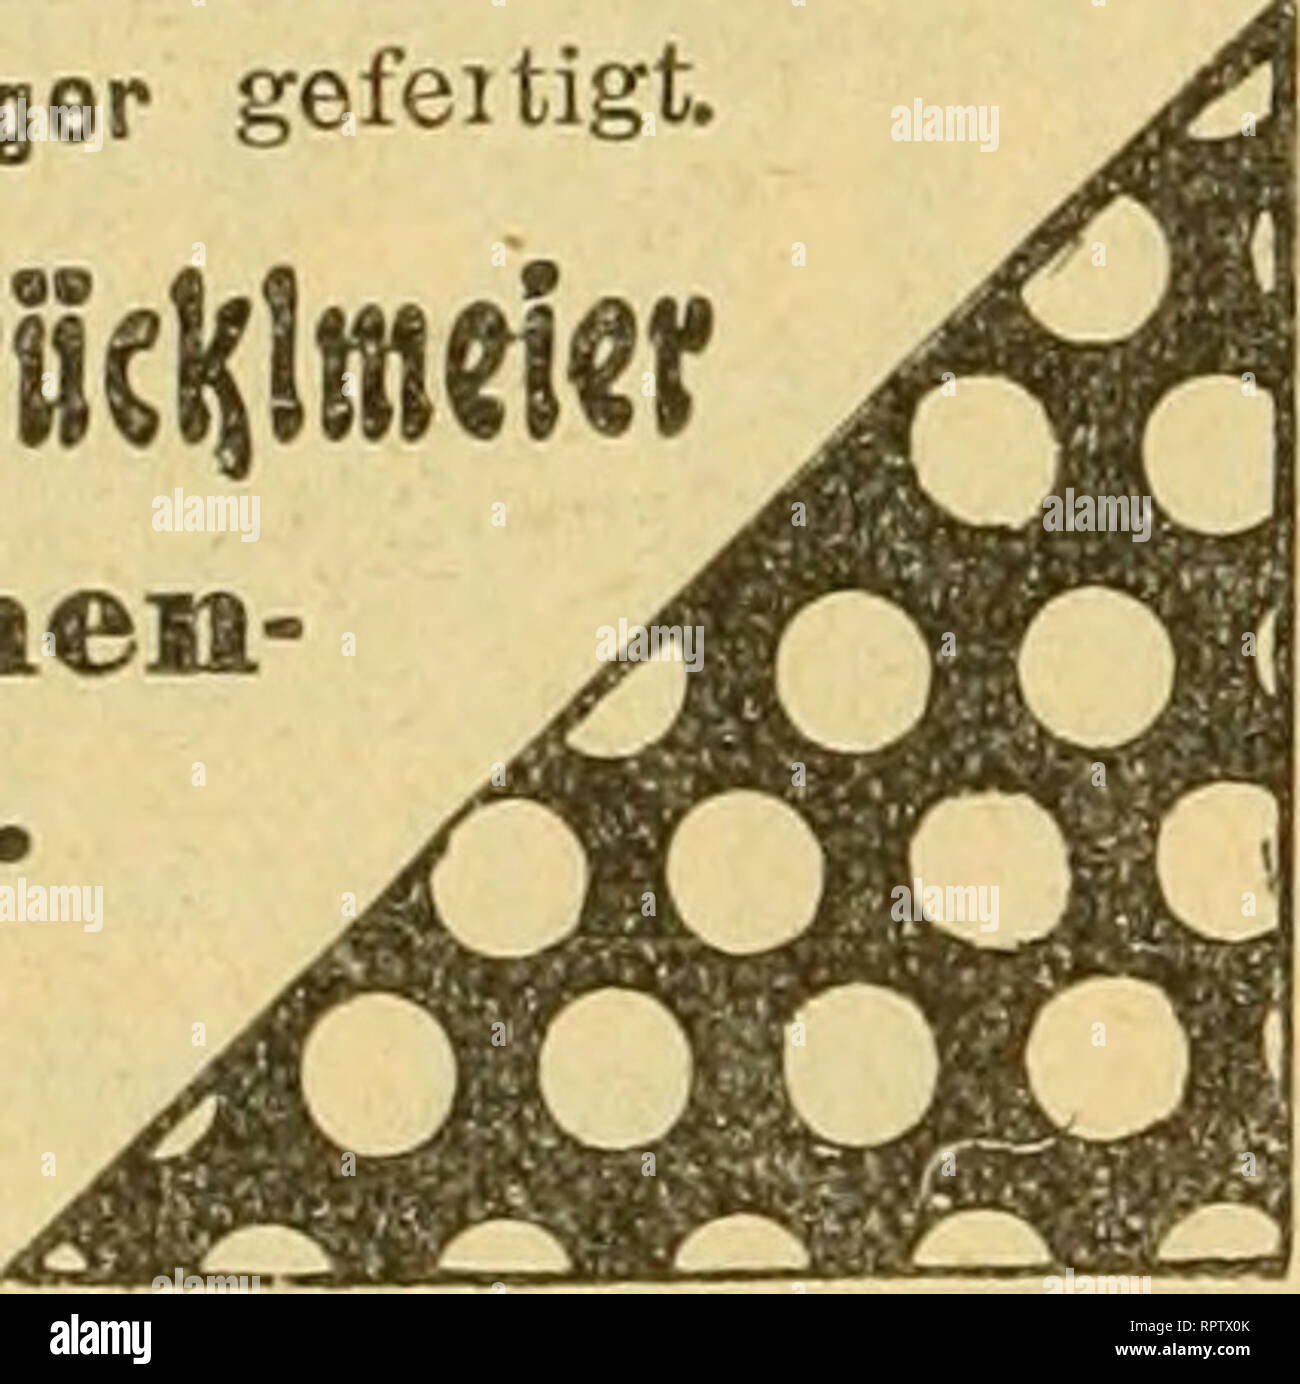 . Allgemeine Fischerei-Zeitung. . Julius ICoch, Ingenieur IHIaschinen- uüd Fiscitreusen-Fabrili Eisenach, Langensalzaerstr. 19. 8 Slencße gifc^- unb Ulolreufe, glot^fönger", öoa|t.a.öc:5taft.®ca^t^9l't. 5 D. R.-G.-Hustsrscüau Nr. 172715. •"' Unb S)tplomen. § SRr. iglac^fang., 150 cmä üängc, 35 cm ^oti^, ä t^ 8 o ftfji. Sa^n^di etfenad^. ^ 9?C.U.,150om5i5esn,40om  f)0(i), k JL 10,0(1 bcSgl. S"r. in., 150 cm Sönge, 501 om^o{^,k^Äl2,00 bcSgI. * 8ottent)cr^O(!ung &AMP; 50 -4 tjtttt.  @ine | 12 Söüc^fe gifc^rotttening toirb jeber JReufe S ""fltottl beigefügt. - 3IIuftr.^rei§Iiftel904 •. Ple Foto Stock